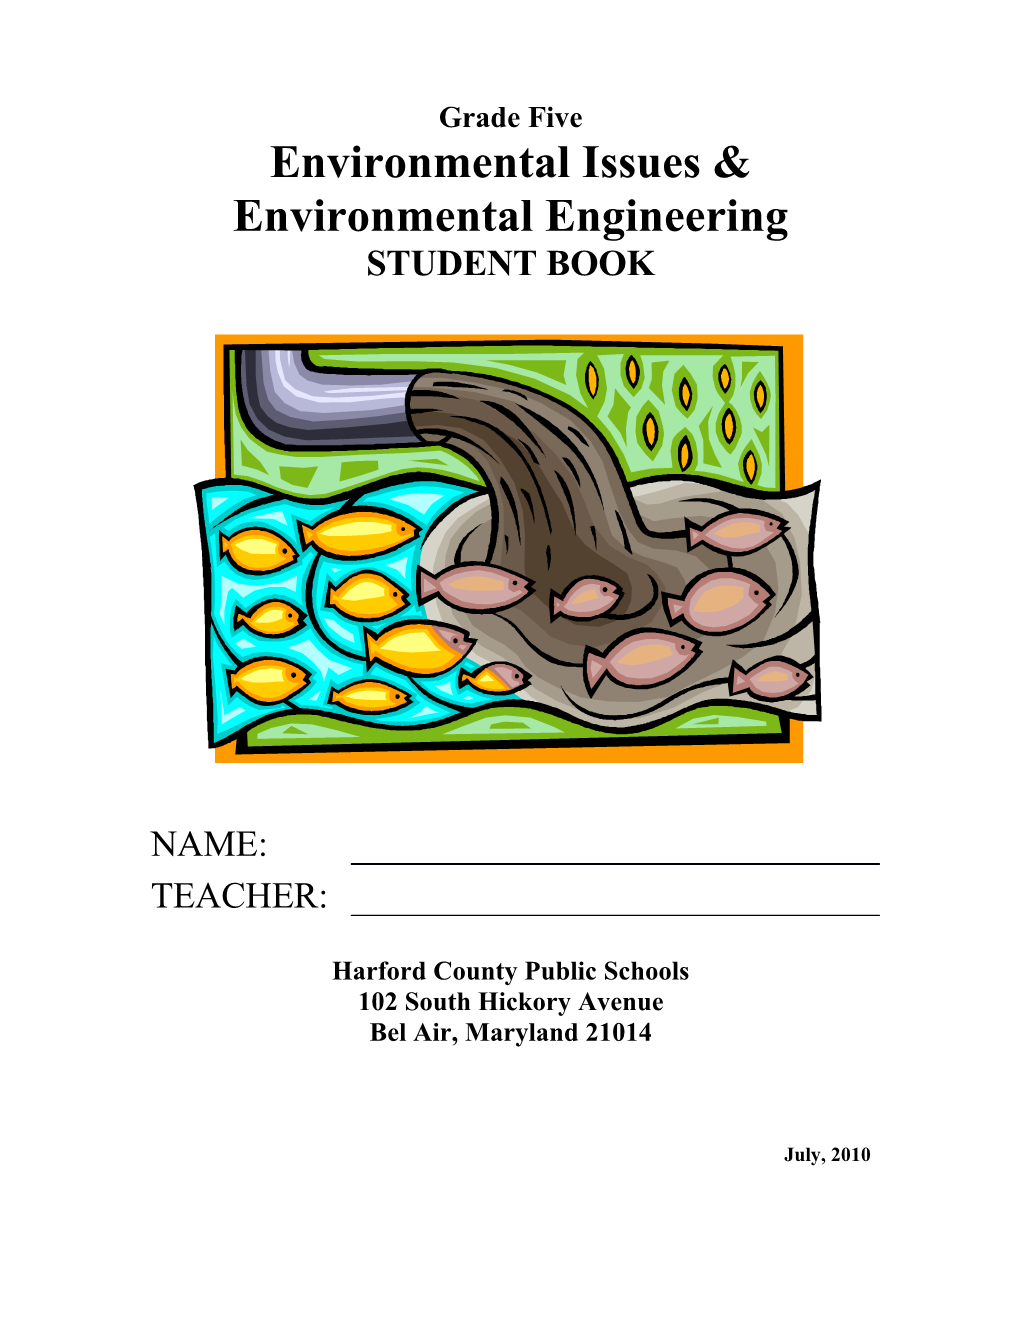 Environmental Issues and Environmental Engineering